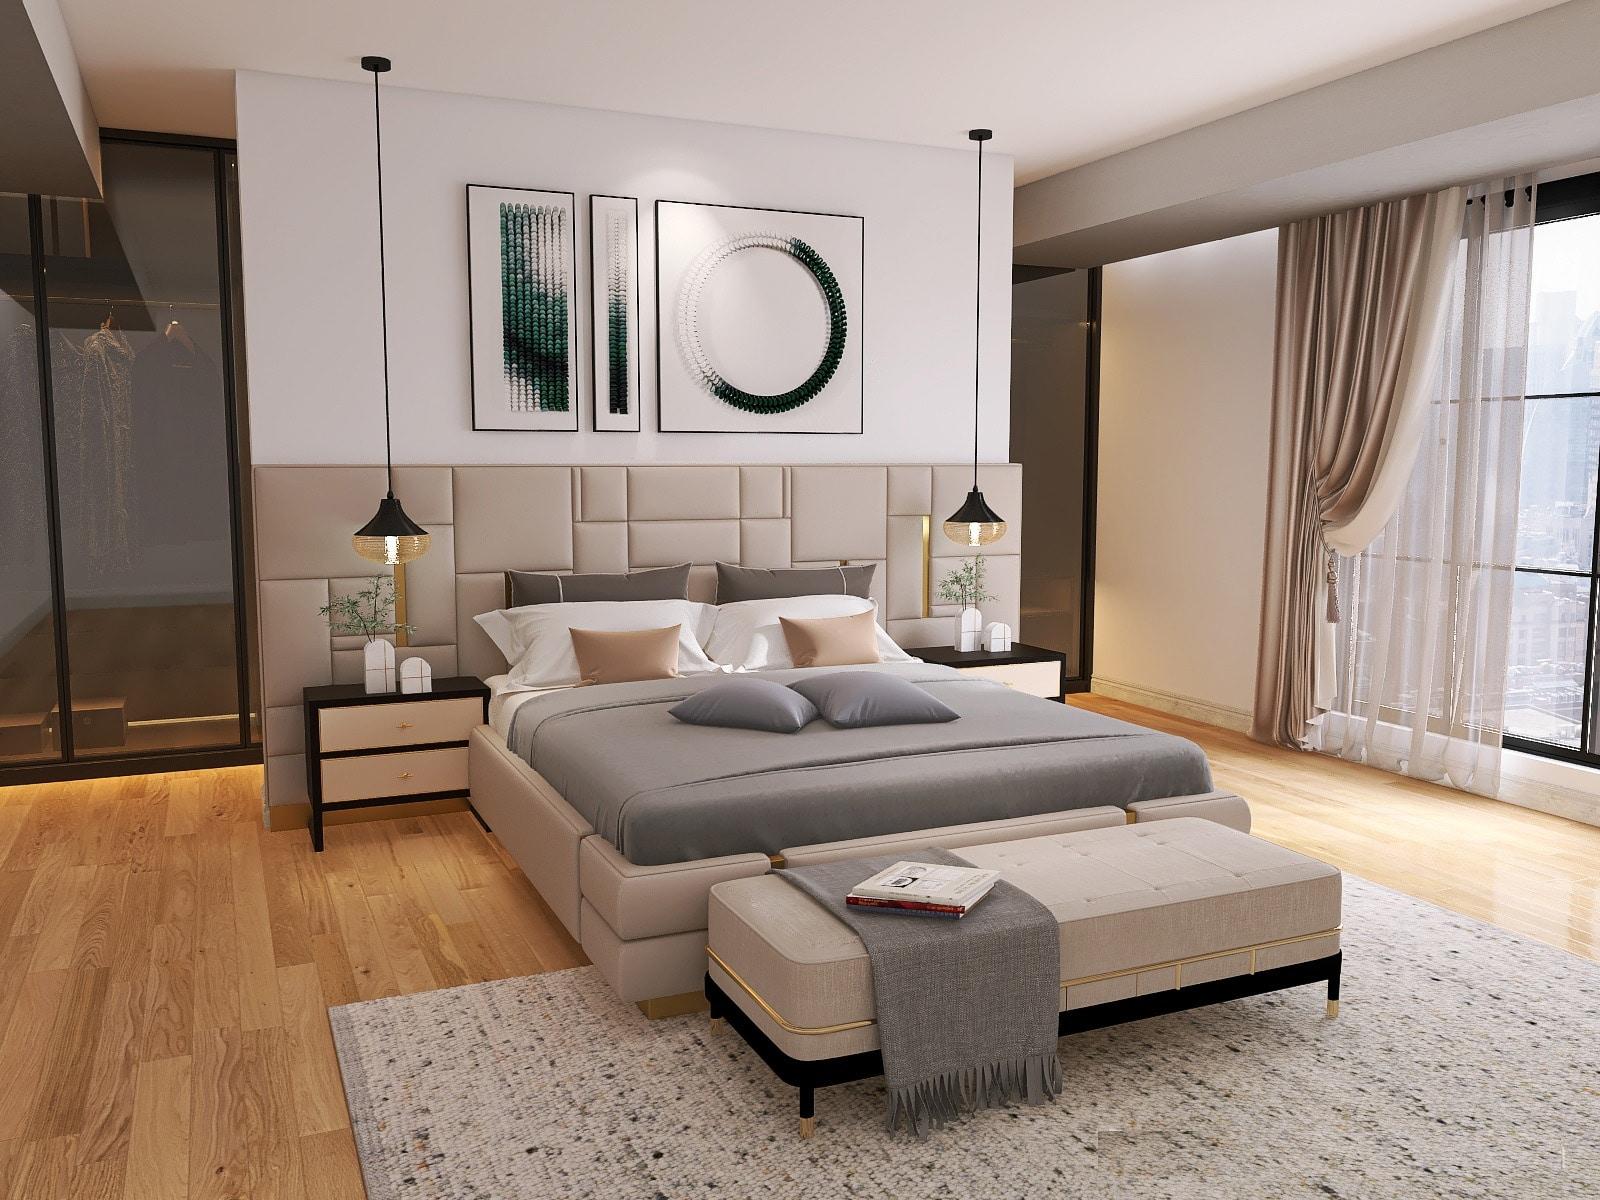 Boutique Hotel Style Bedroom Design